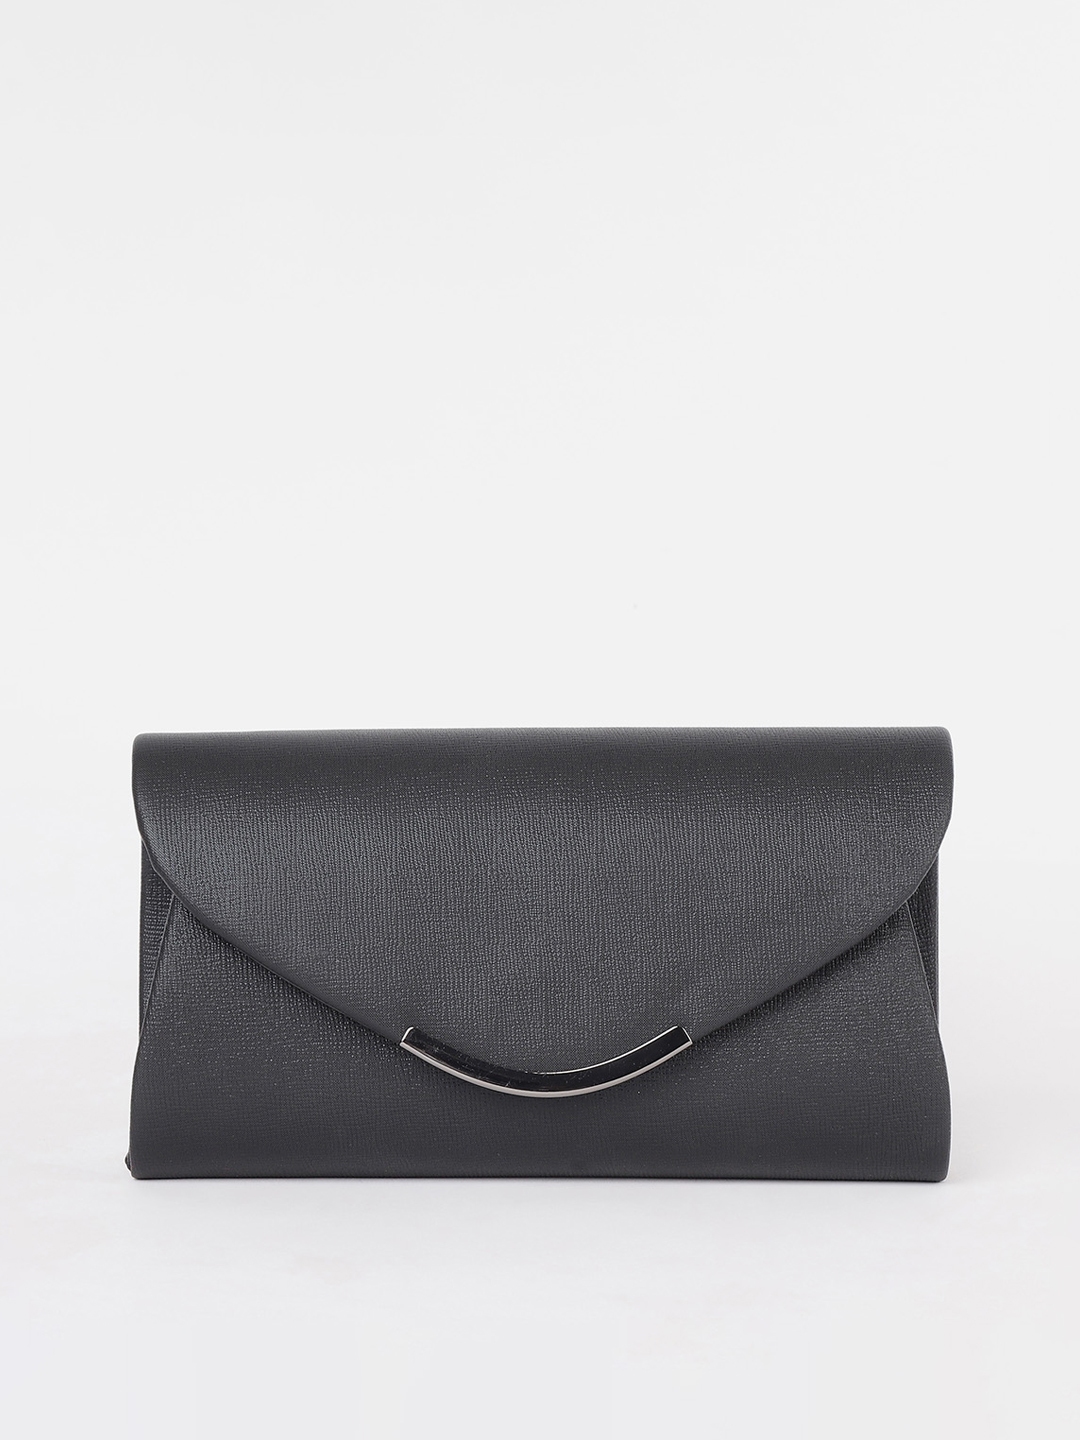 Fabindia Clutches : Buy Fabindia Fabric Black Clutch Bag Online